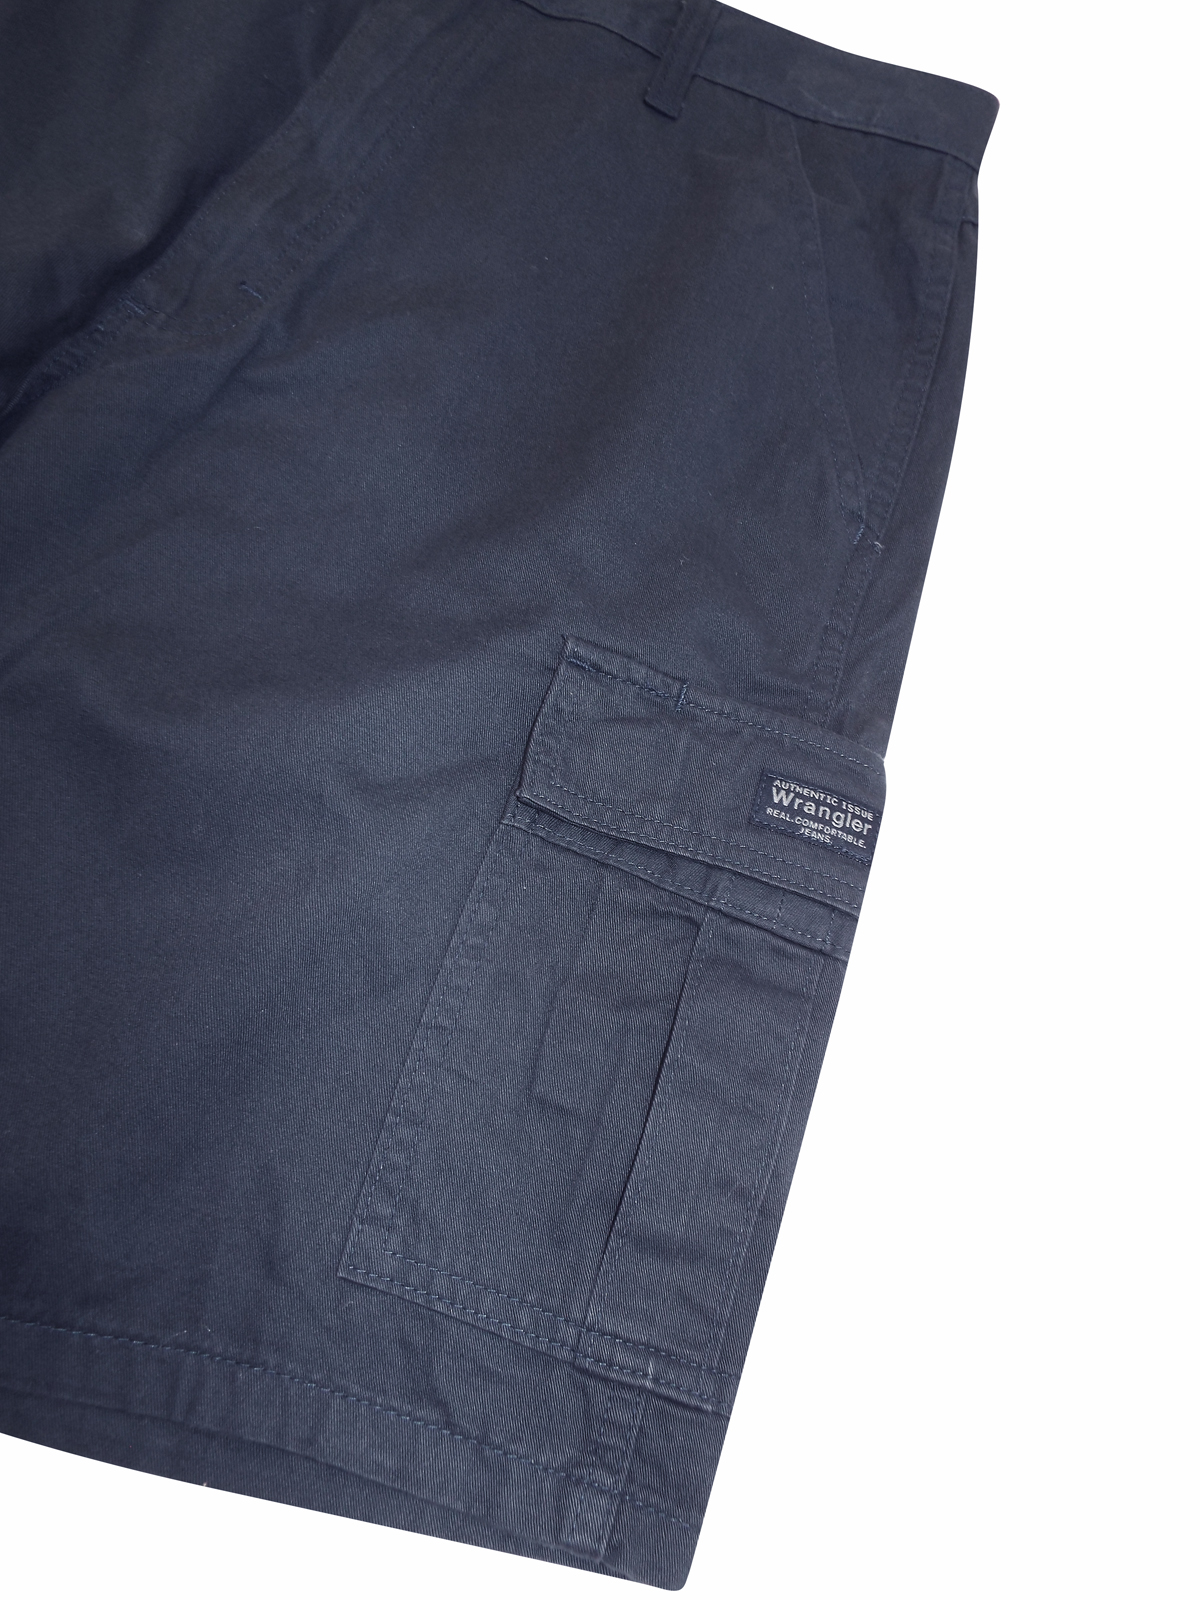 wrangler real comfortable jeans cargo shorts